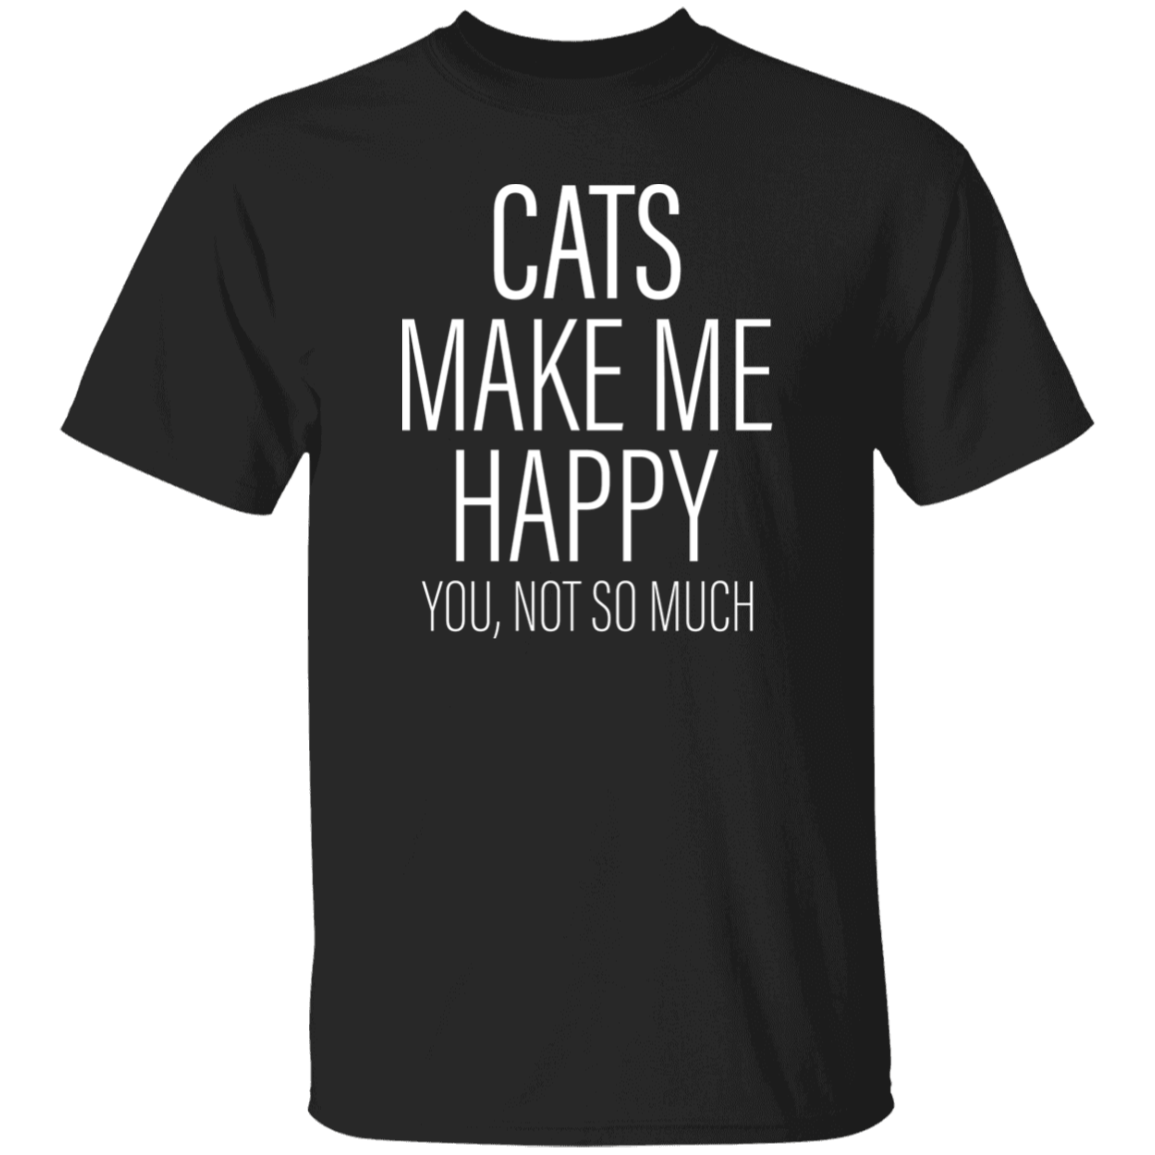 Cats Make Me Happy - T Shirt.